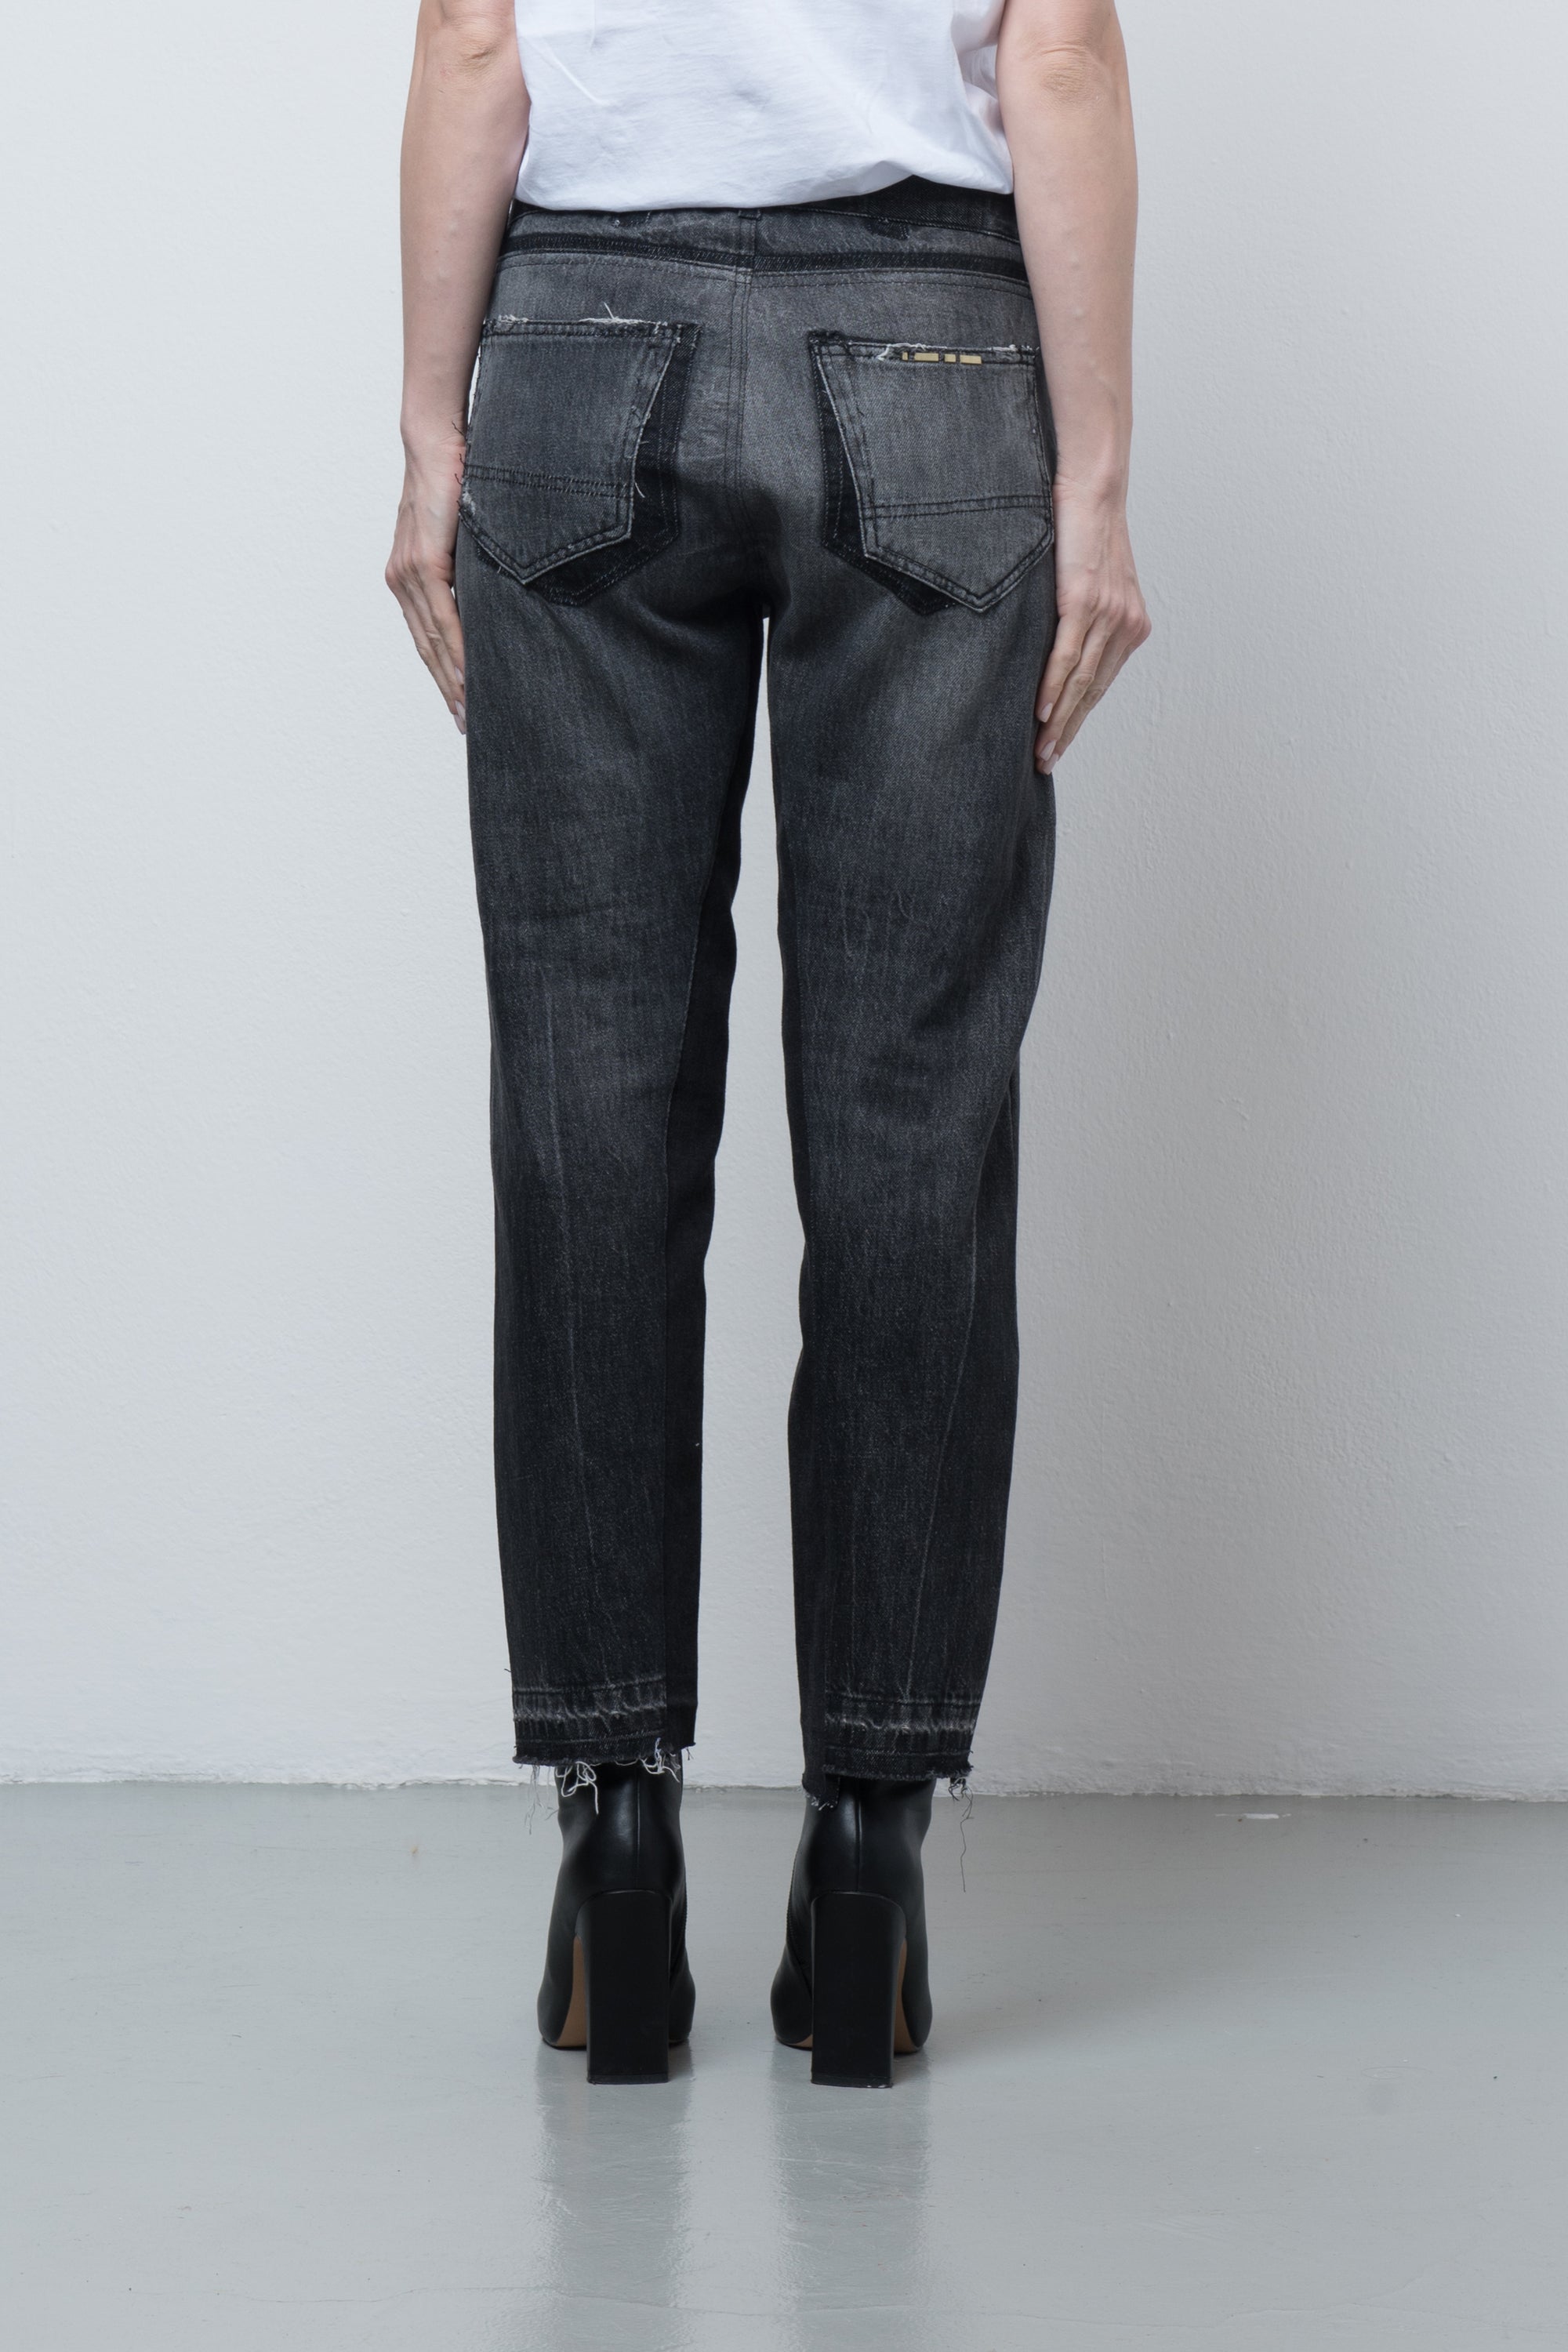 Apollo carrot jean unisex - upcycled garment